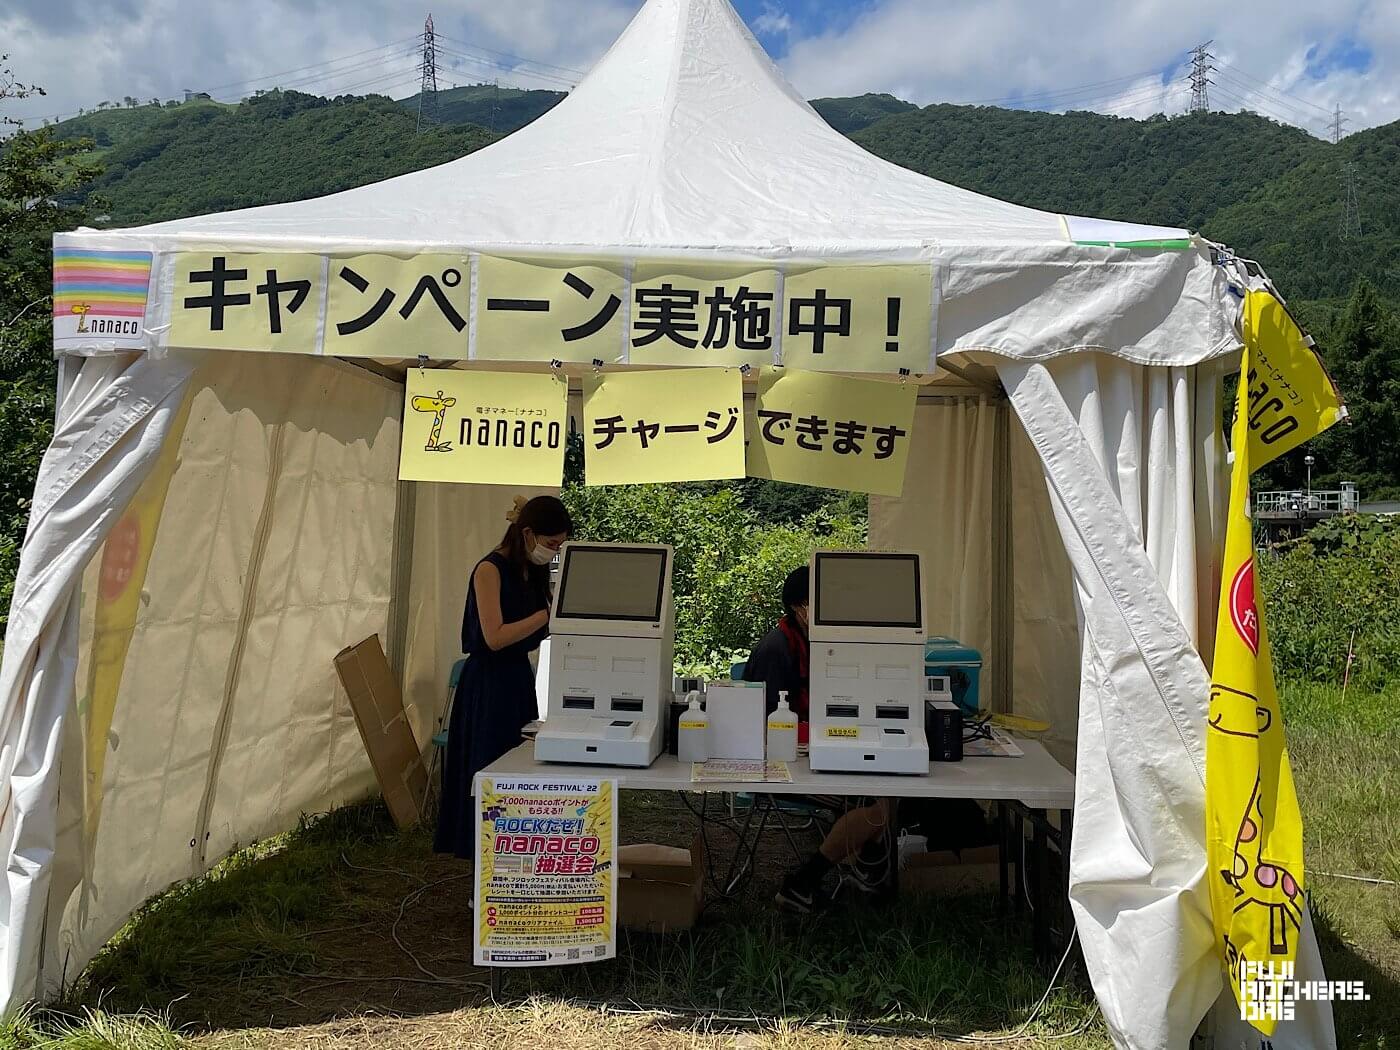 Go cashless at Fuji Rock